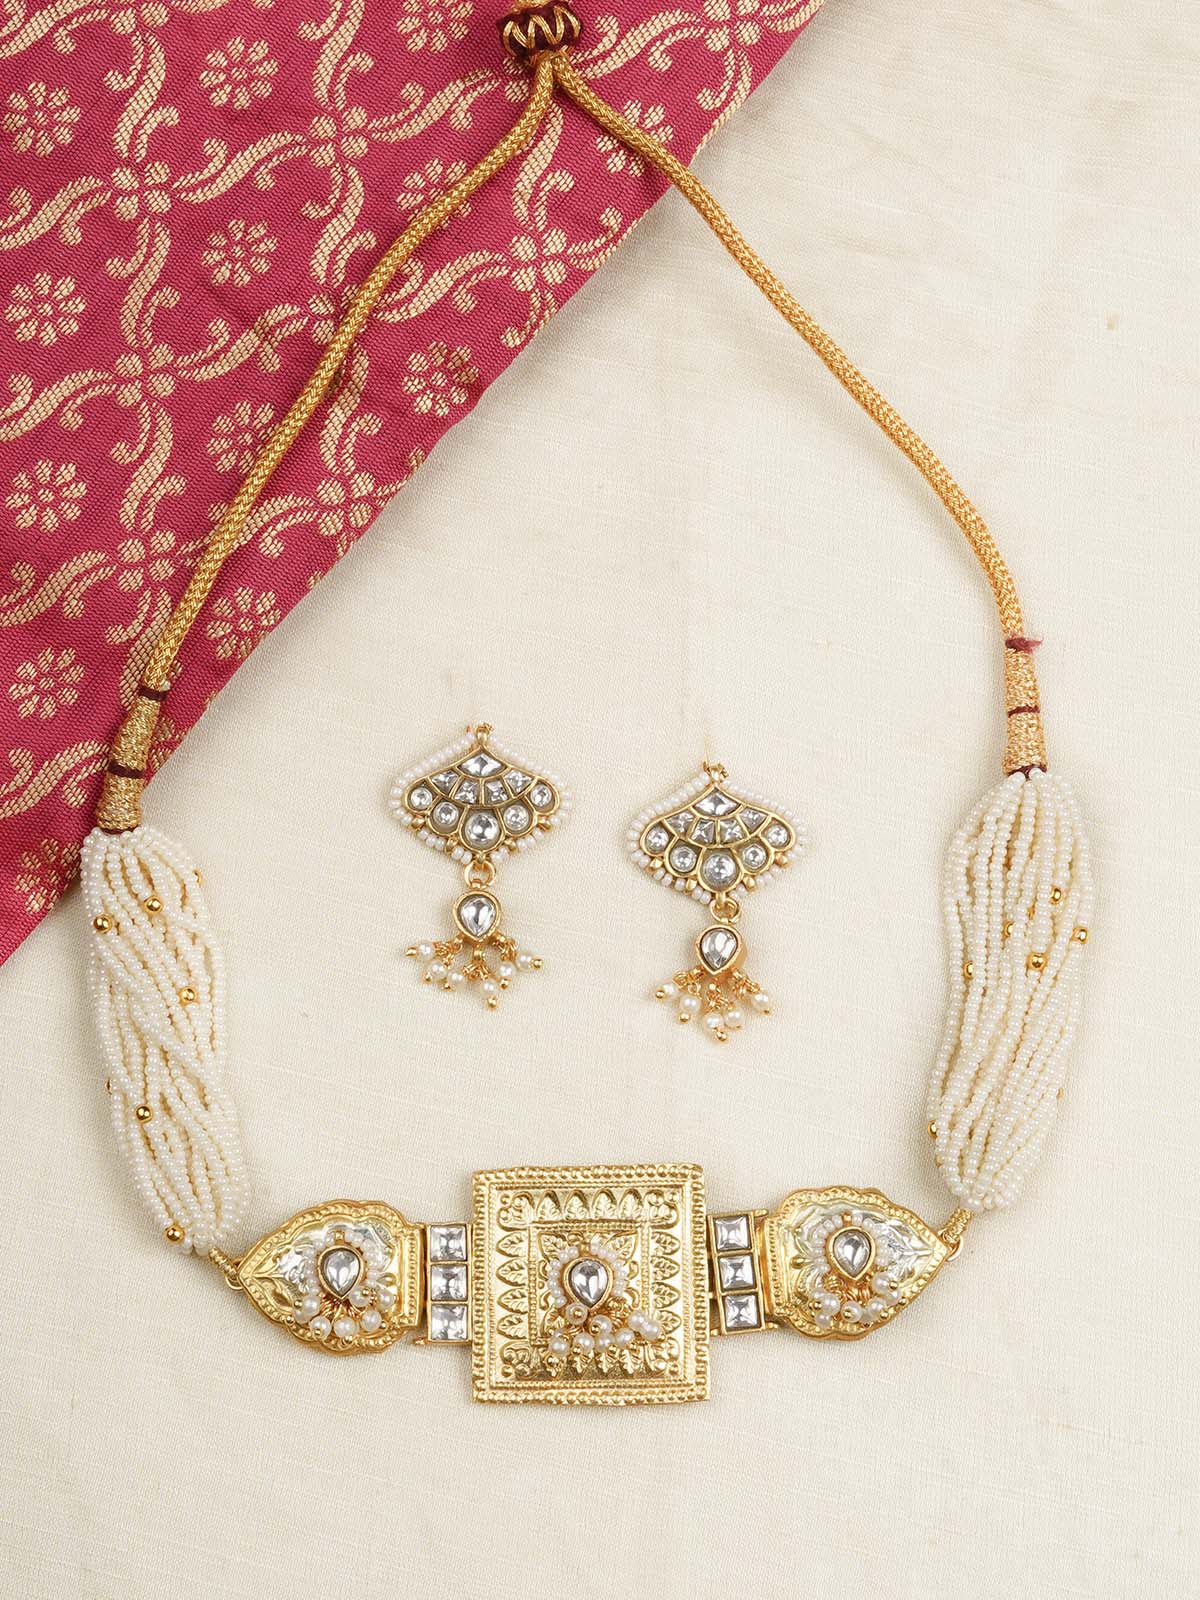 MR-S670 - White Color Gold Plated Mishr Necklace Set